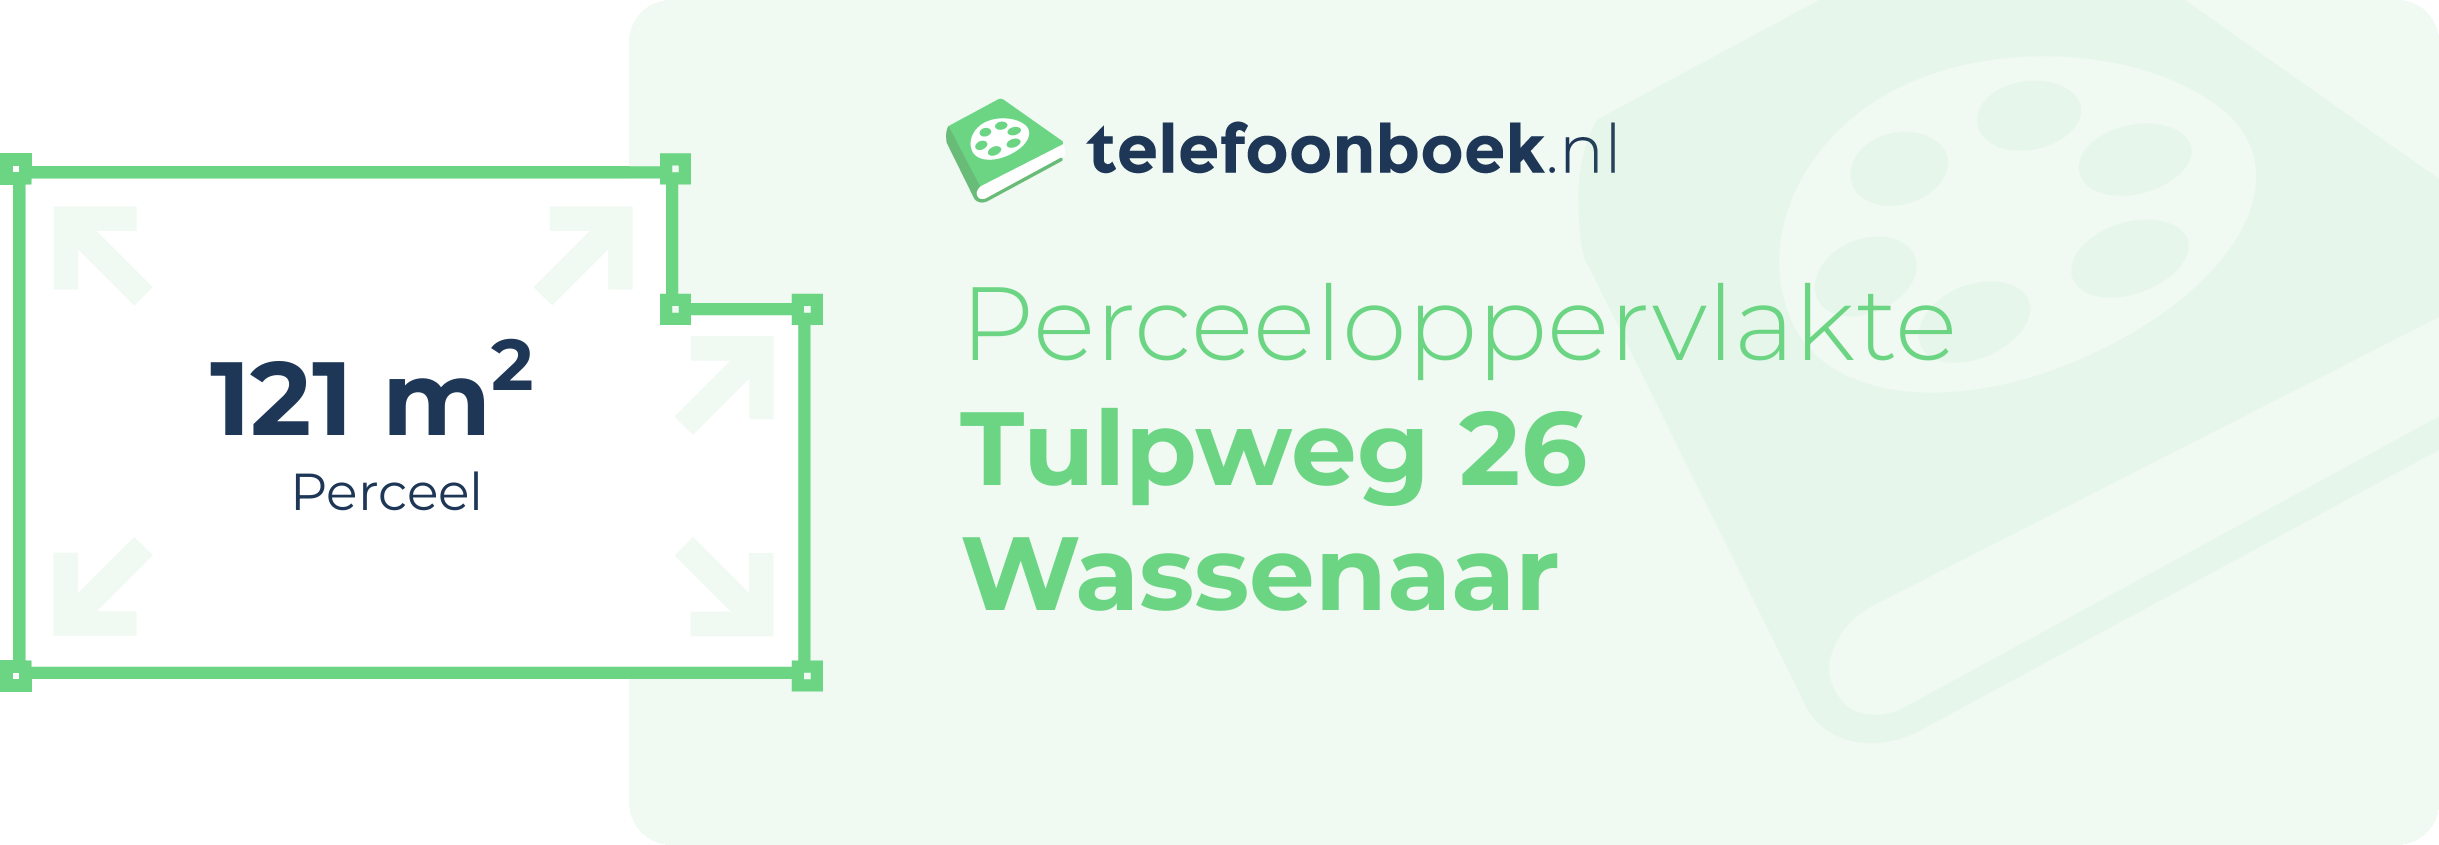 Perceeloppervlakte Tulpweg 26 Wassenaar